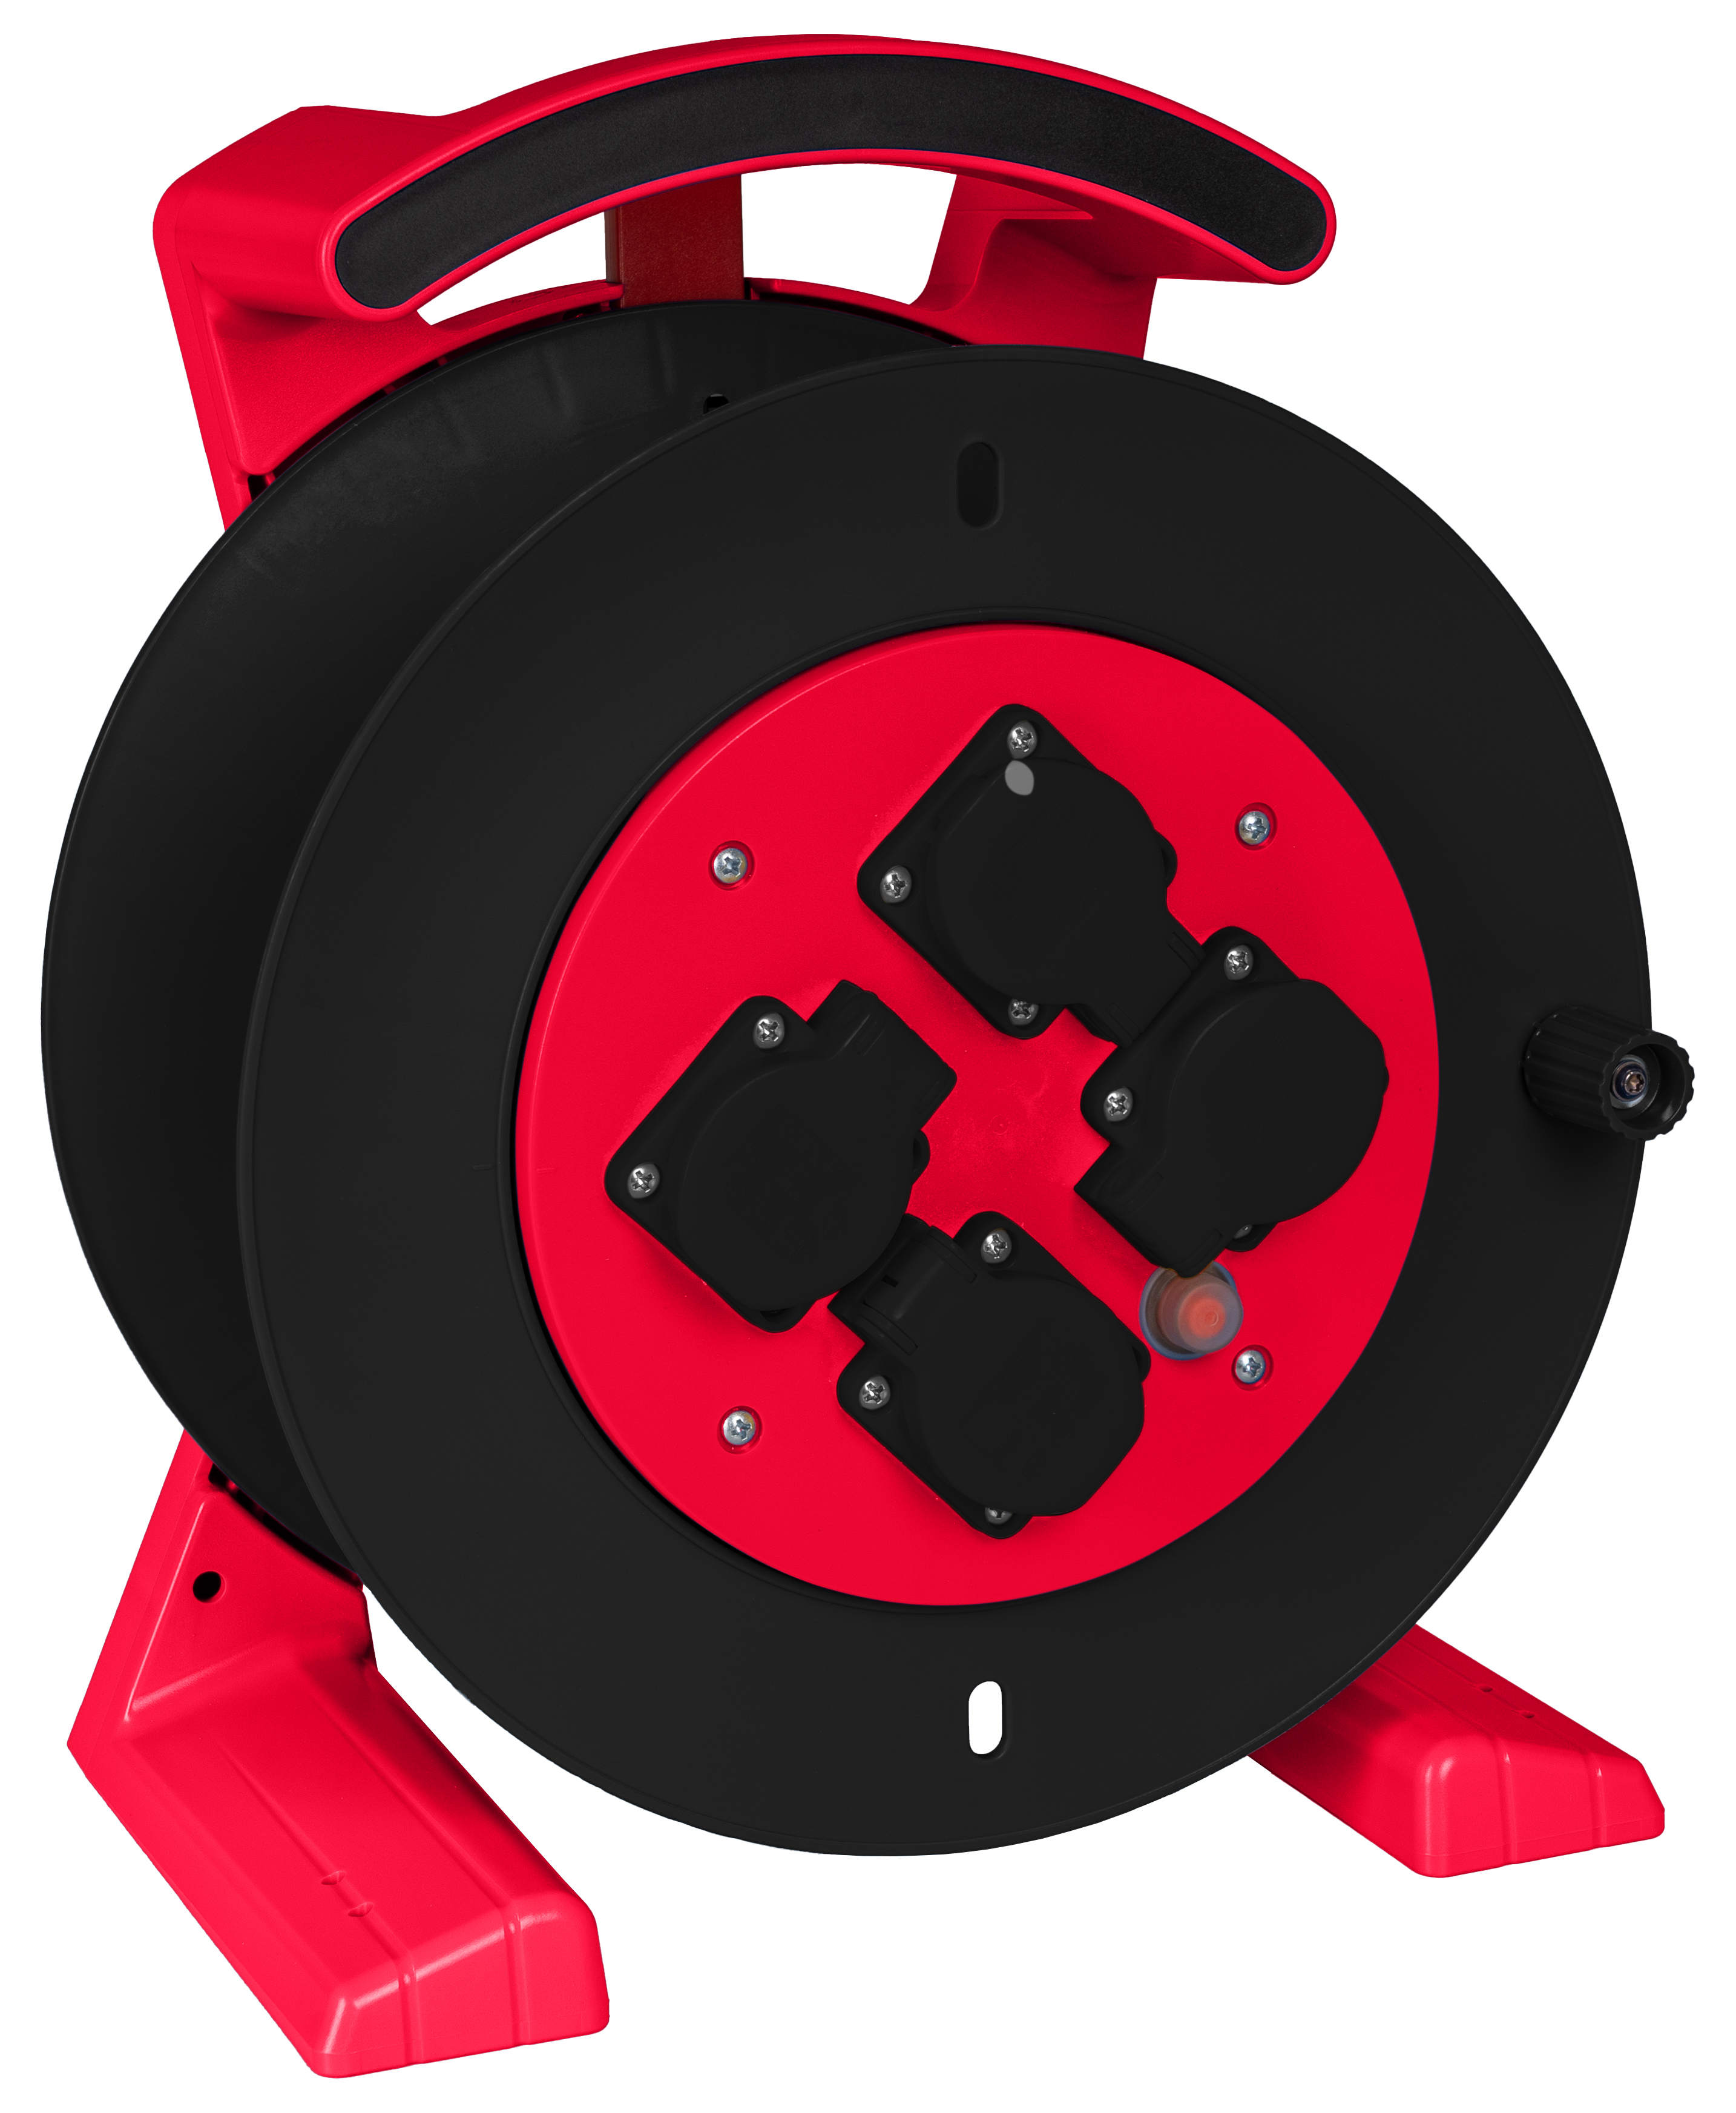 Leerkabeltrommel in rot-schwarz, 4 x Schutzkontakt-Steckdose JUMBO L 2.0